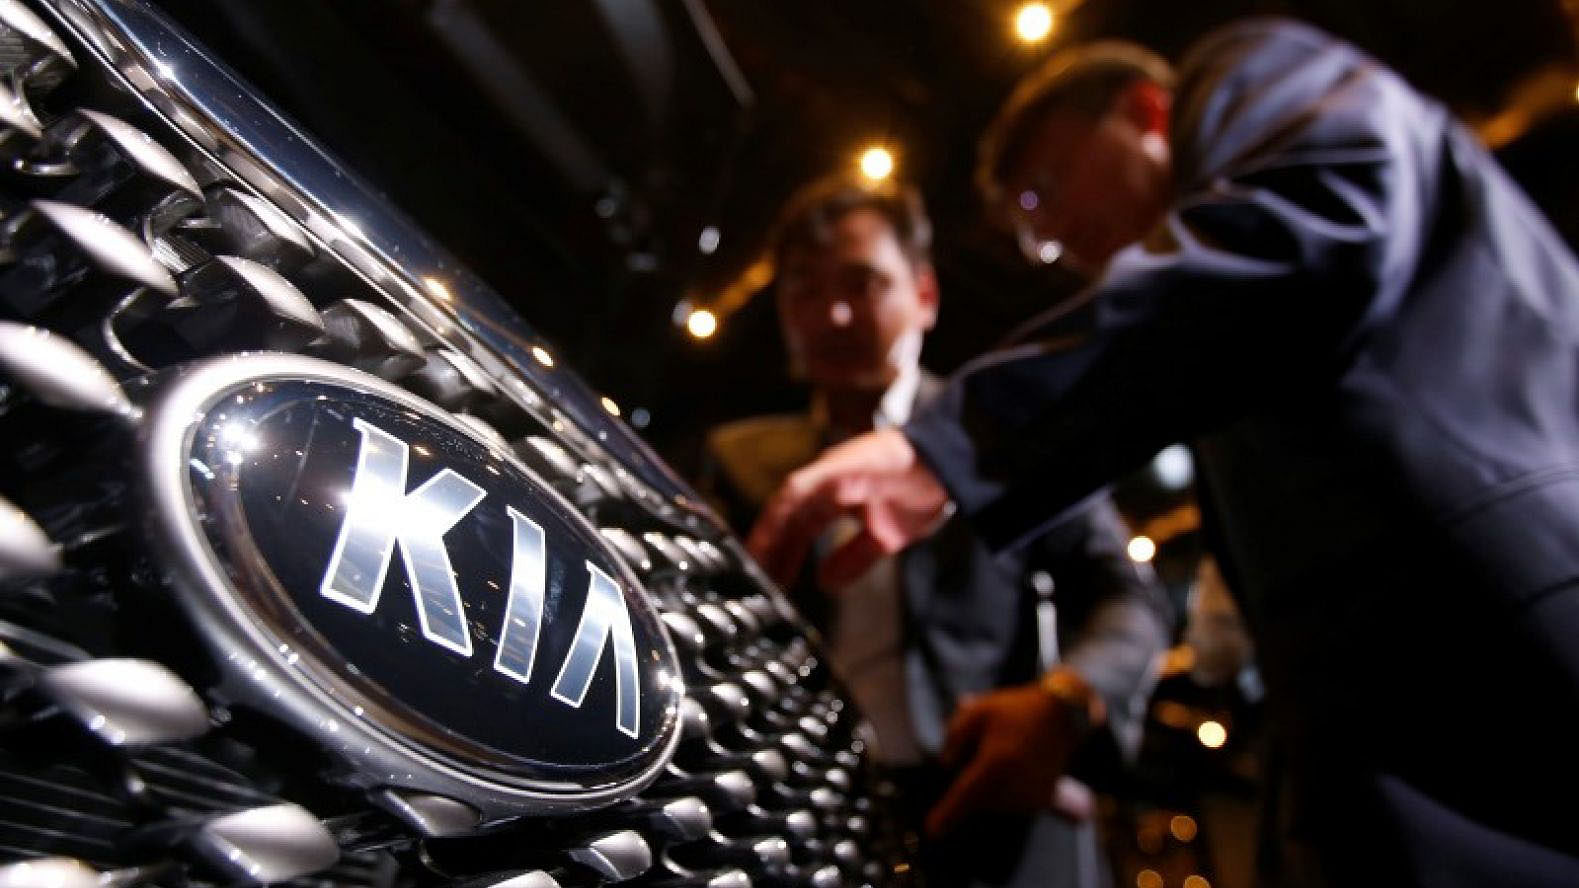 Kia badge on a car. (Photo: Reuters)